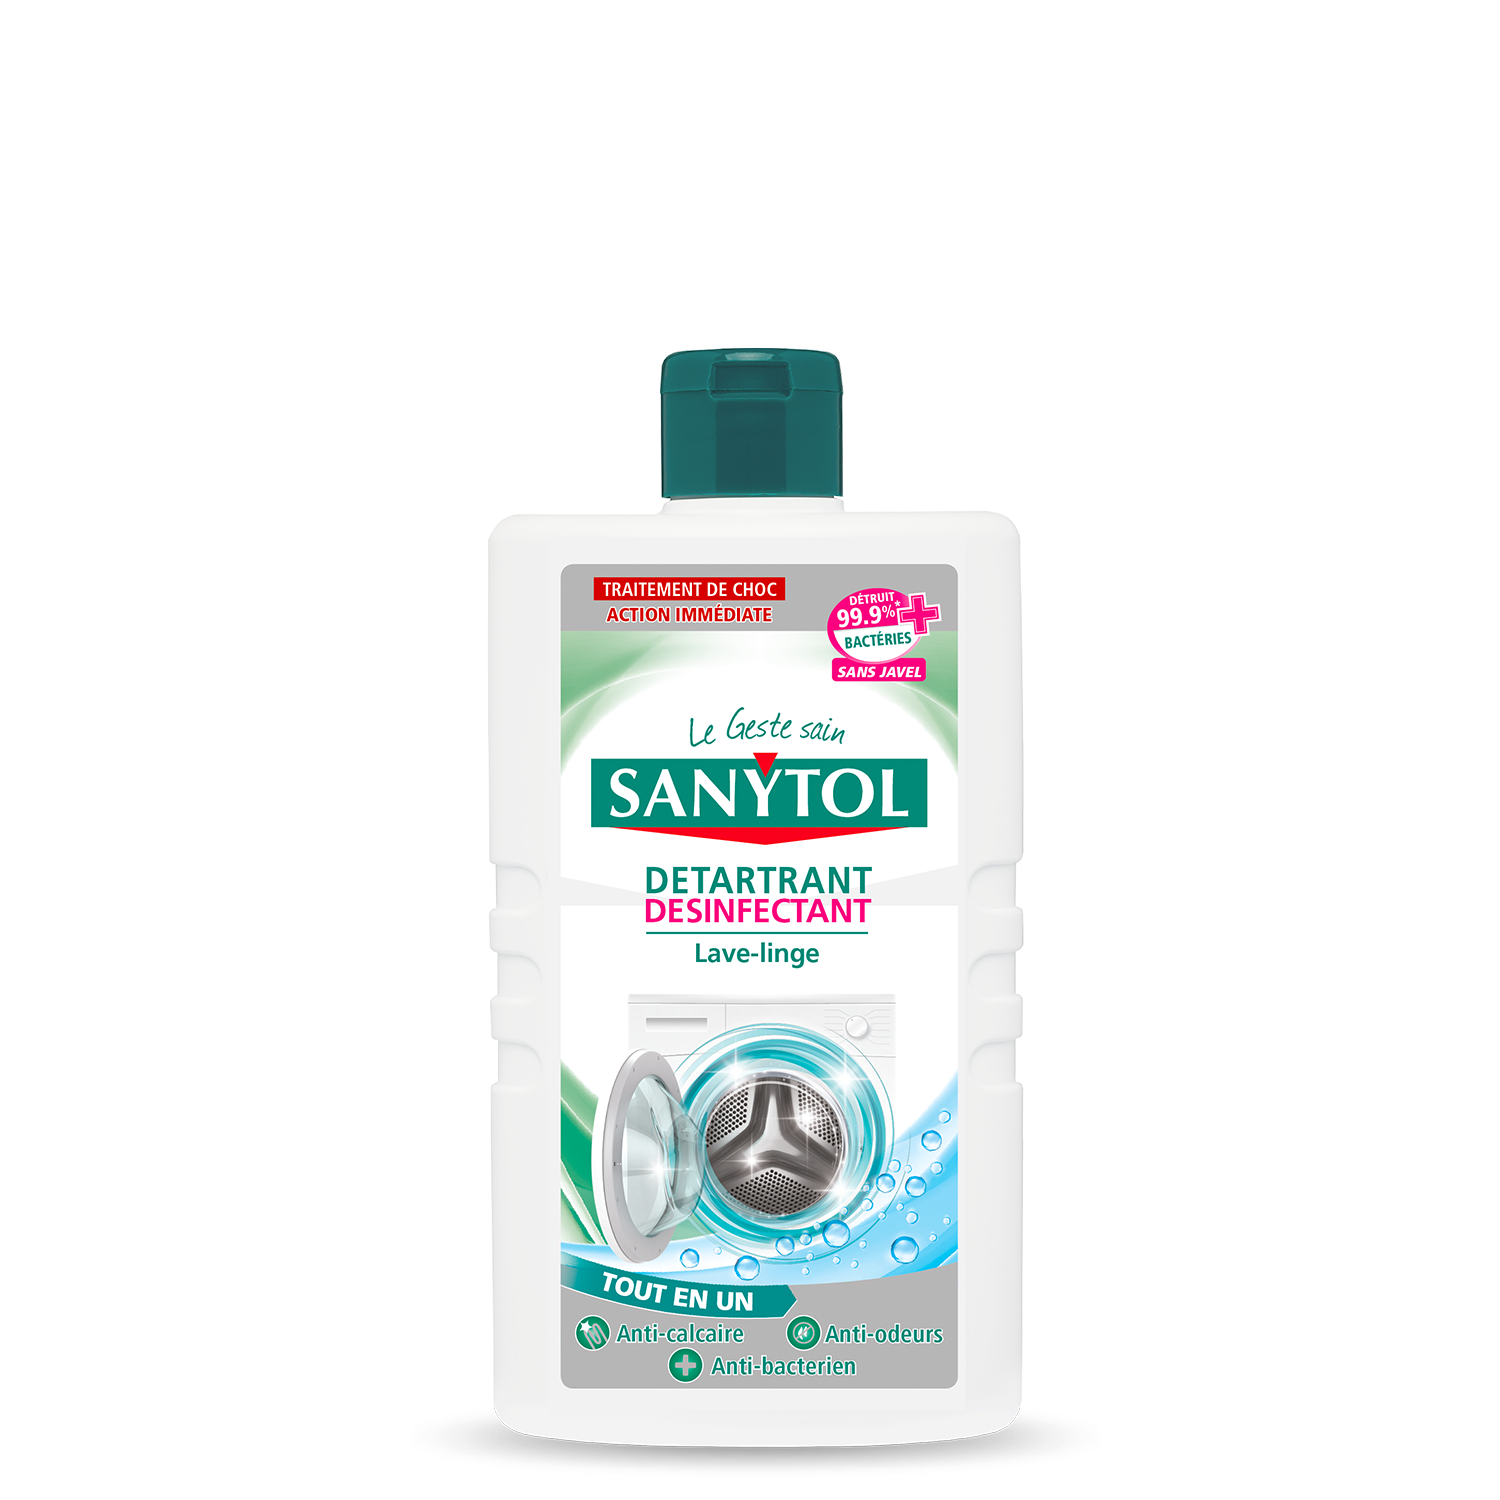 Sanytol - Kitchen Cleaner Disinfectant (500ml)